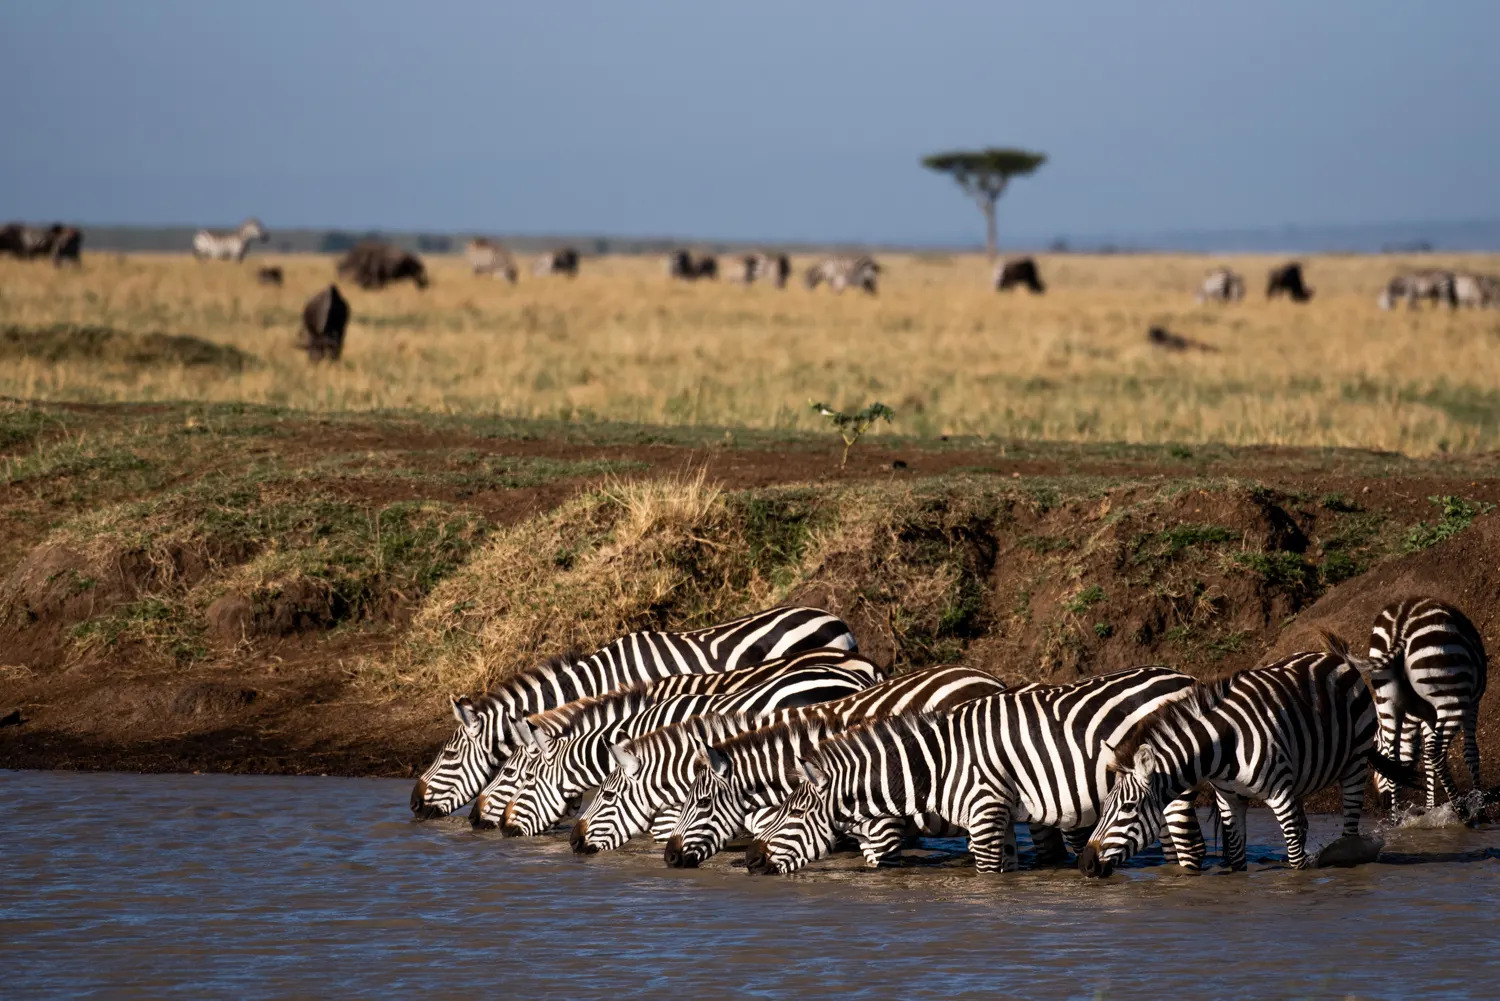 Zebras Drinking